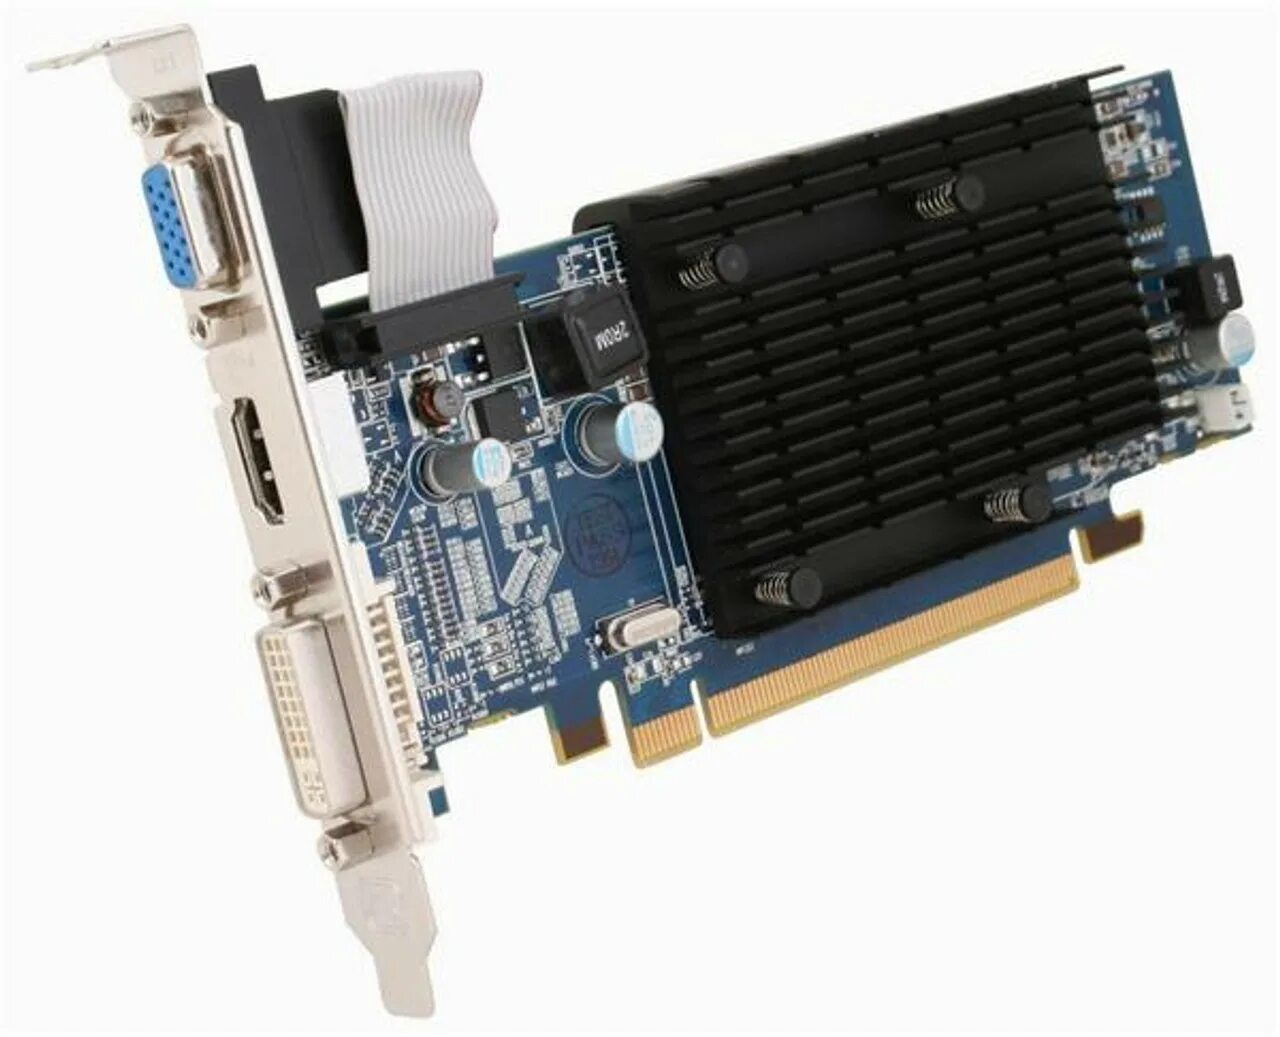 Hd4550 1gb. AMD Radeon 4550.